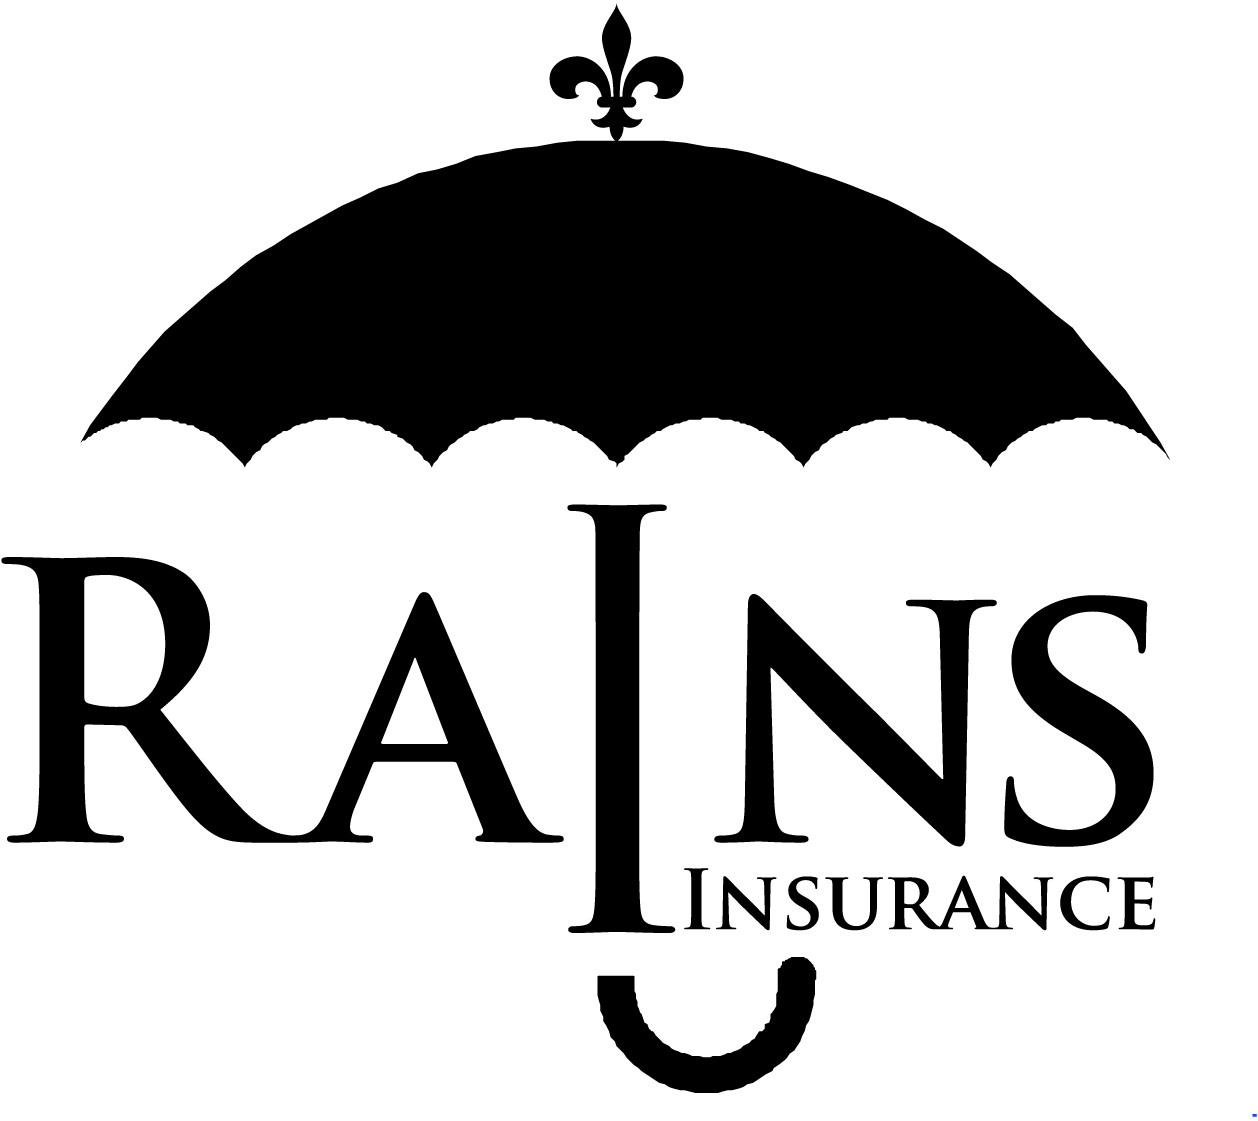 Rains Insurance, Inc.'s logo